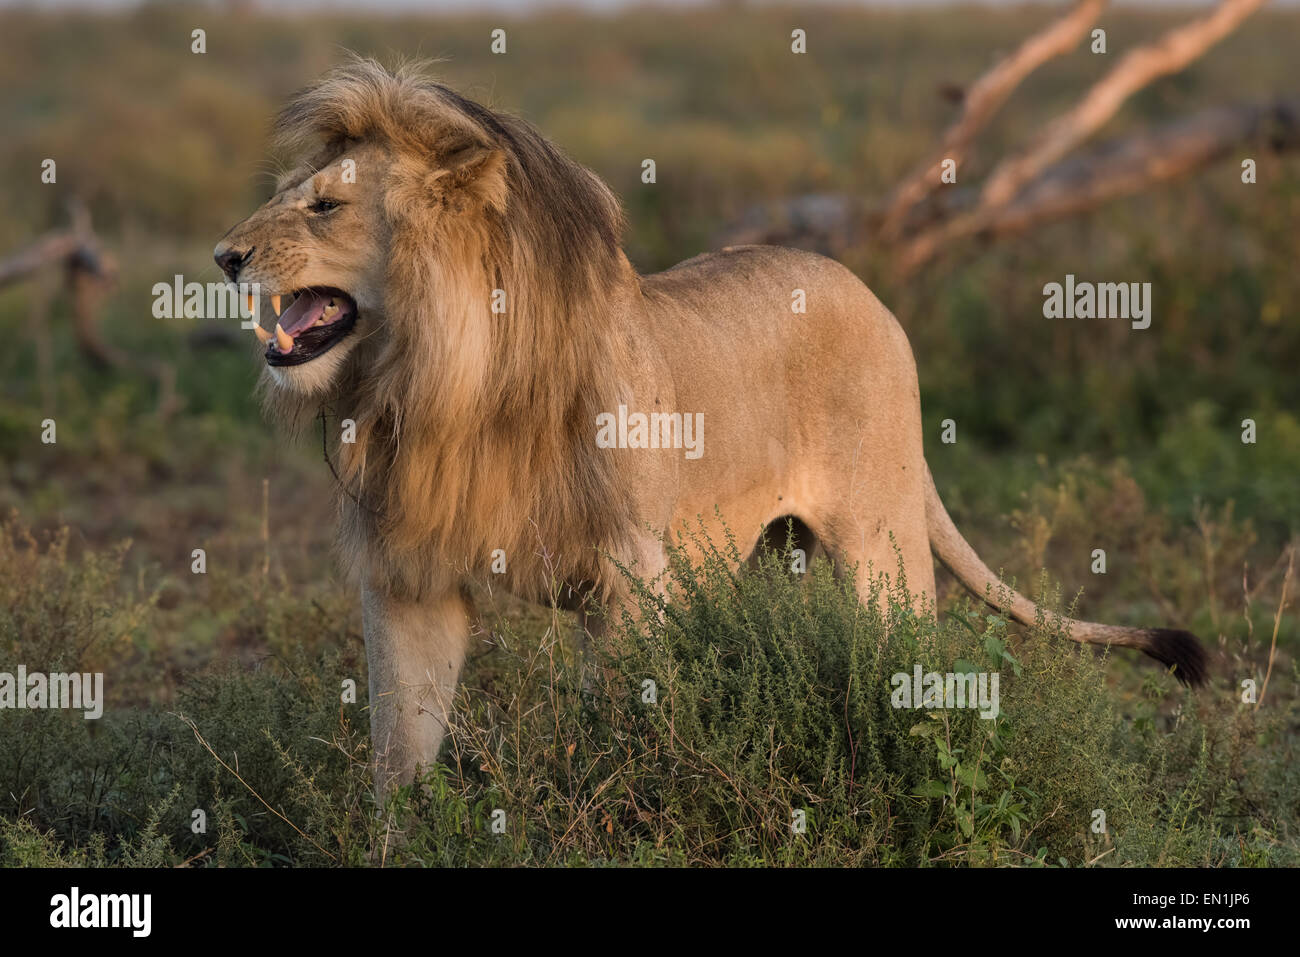 Leone maschio flehmen comportamento. Foto Stock